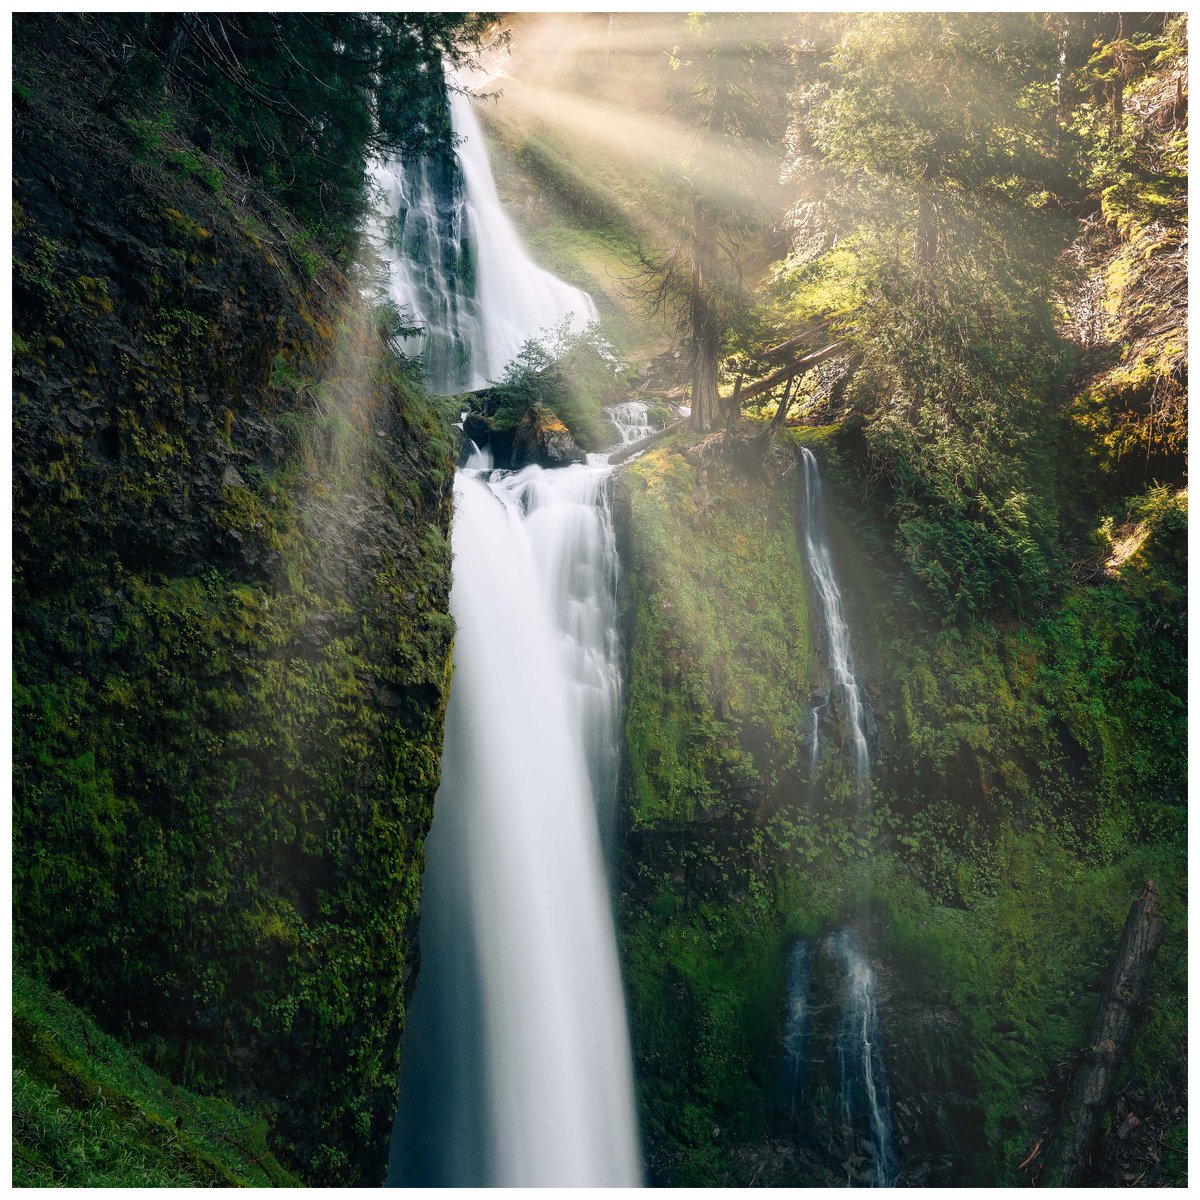 Falls Creek Falls

#11 of 100 in my NFT collection - #100waterfalls

#NFT #nftproject #nftcommunity #nftphotography @opensea #nftcollector #photography #giffordpinchot #fallscreek